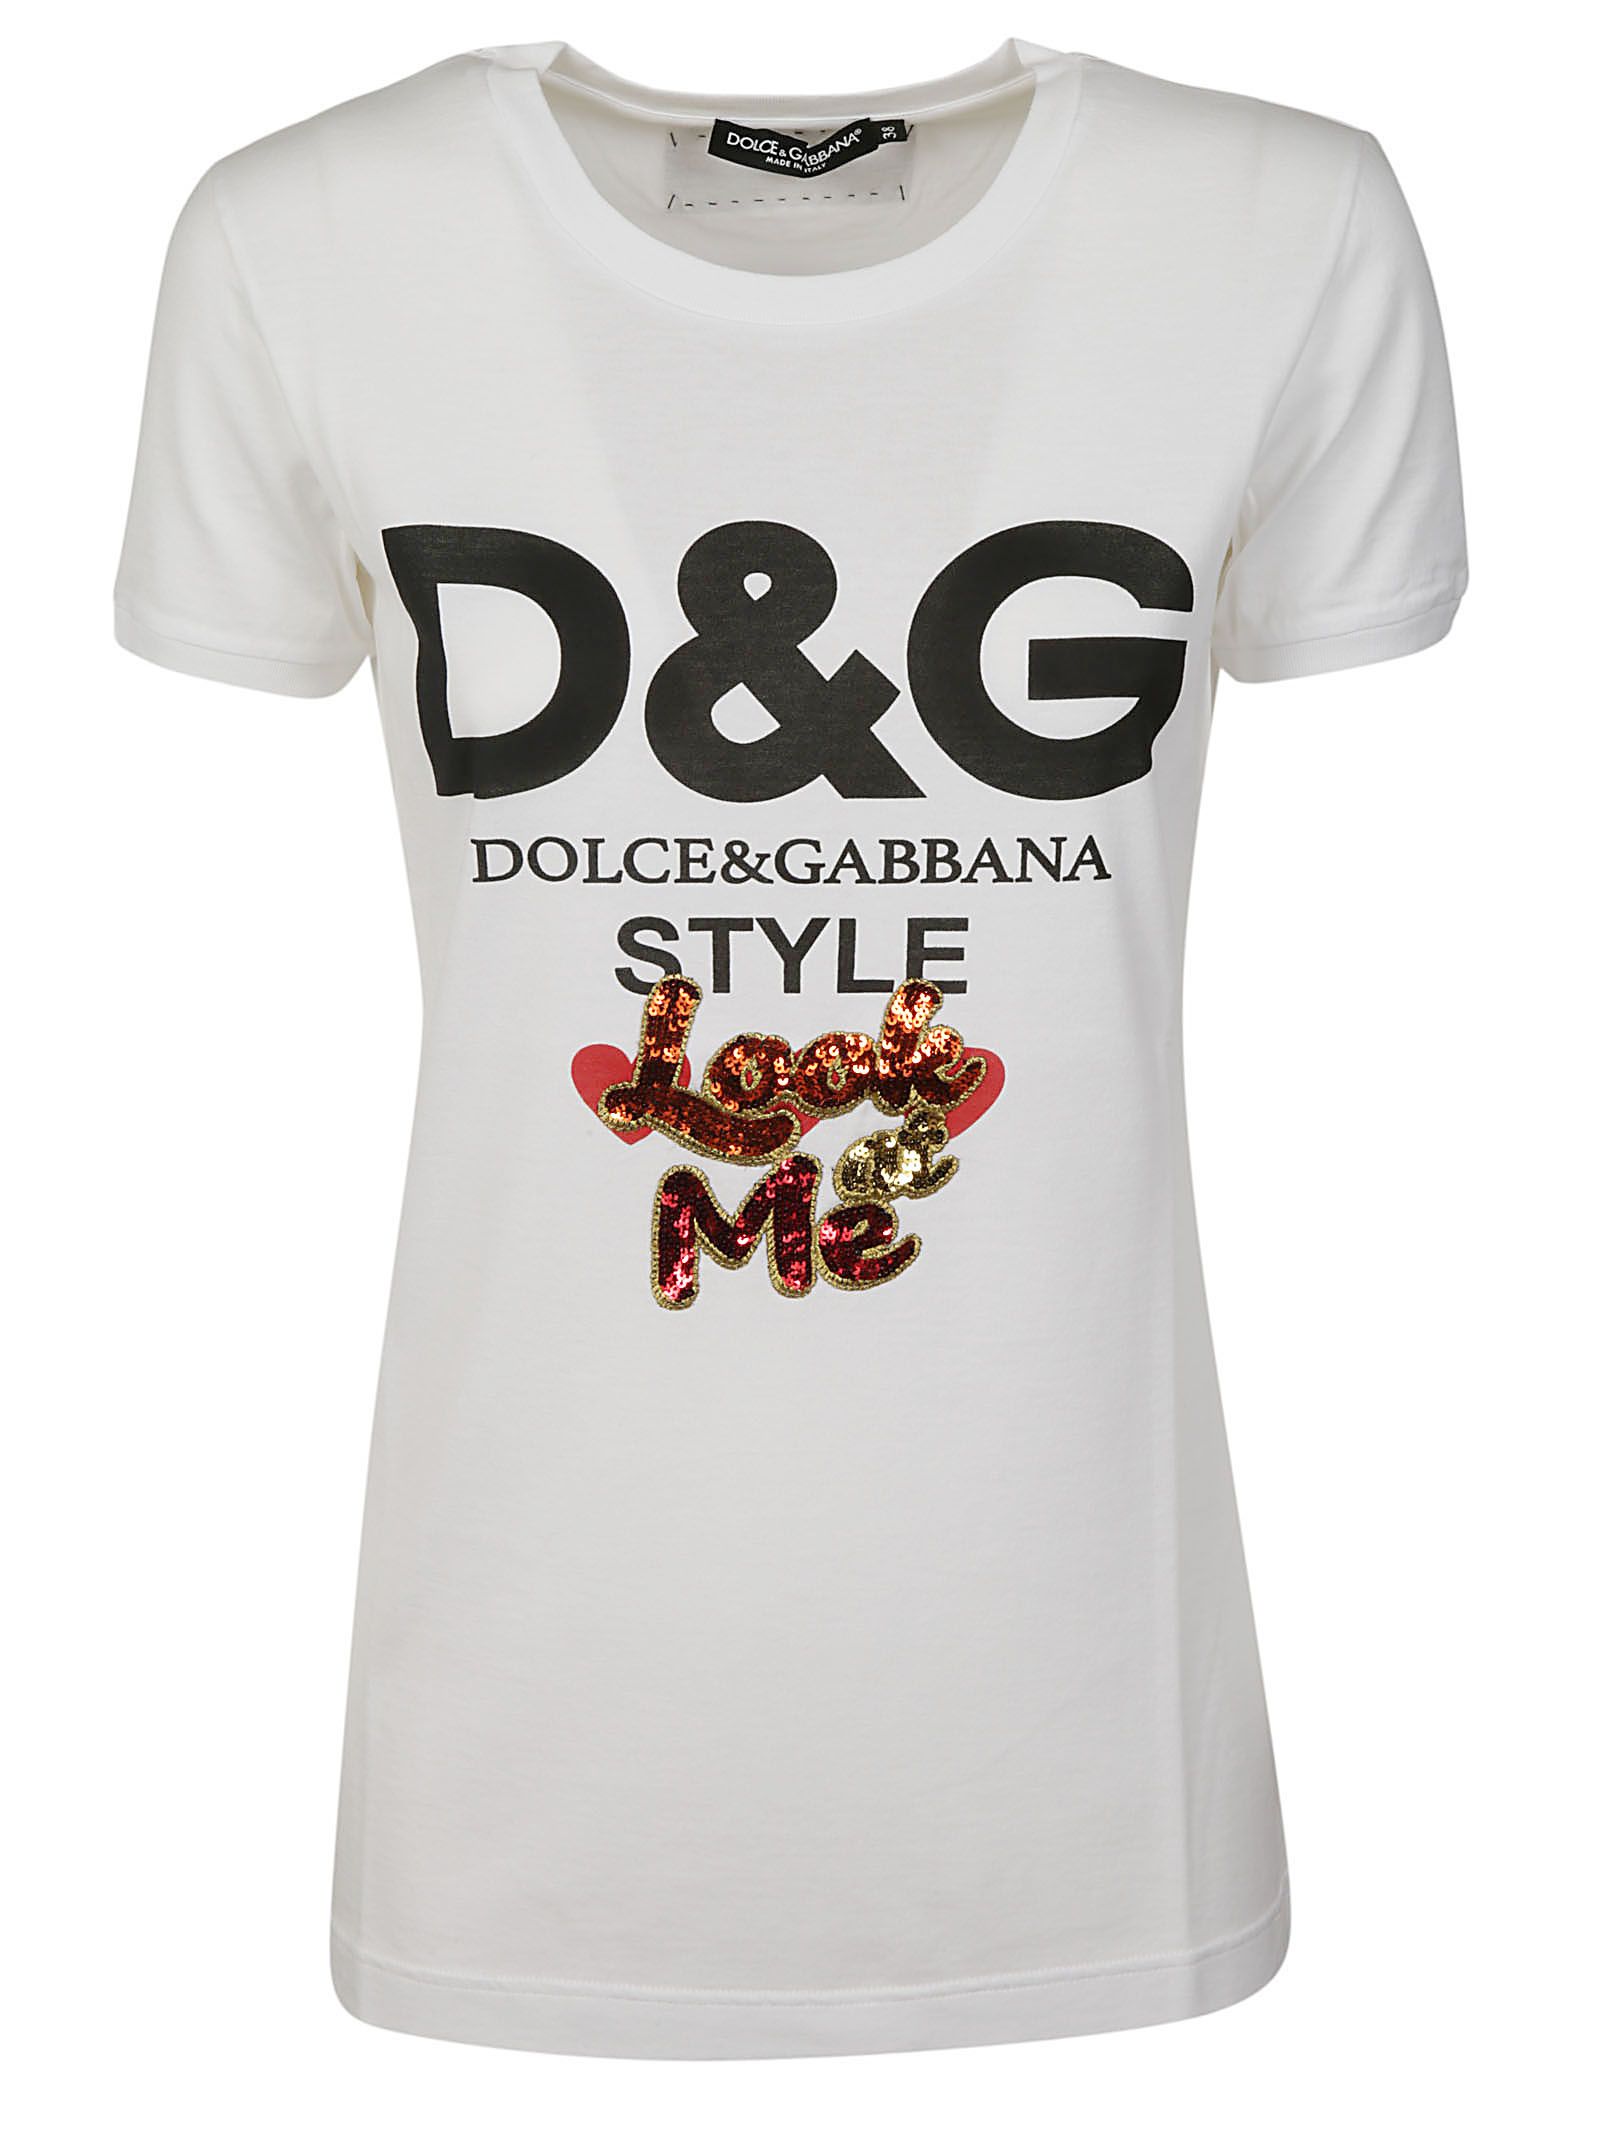 italist | Best price in the market for Dolce & Gabbana Dolce & Gabbana ...